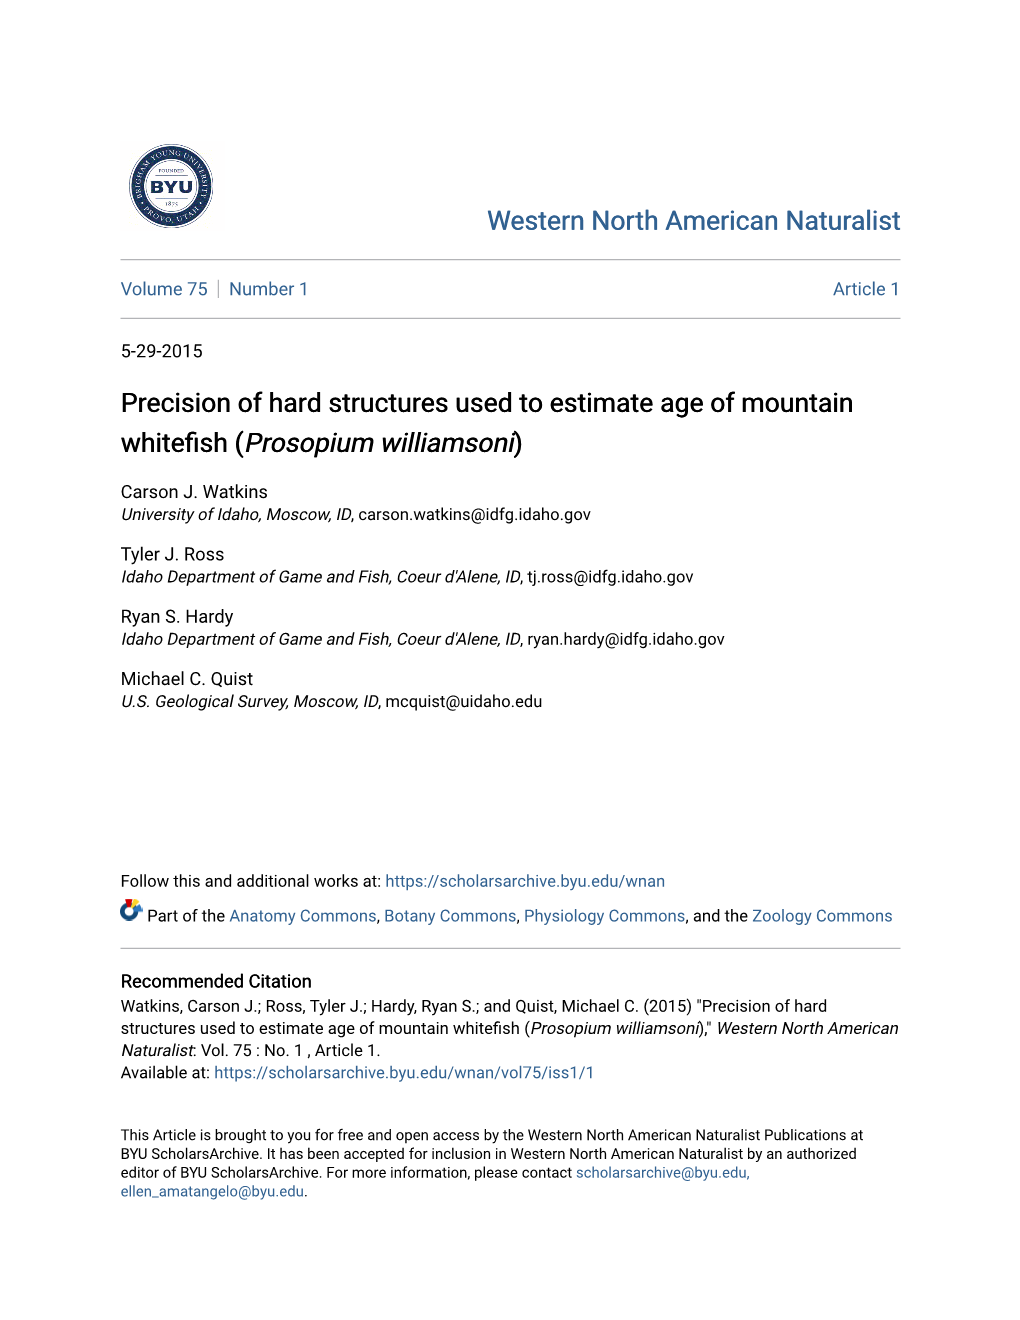 Precision of Hard Structures Used to Estimate Age of Mountain Whitefish (Prosopium Williamsoni)